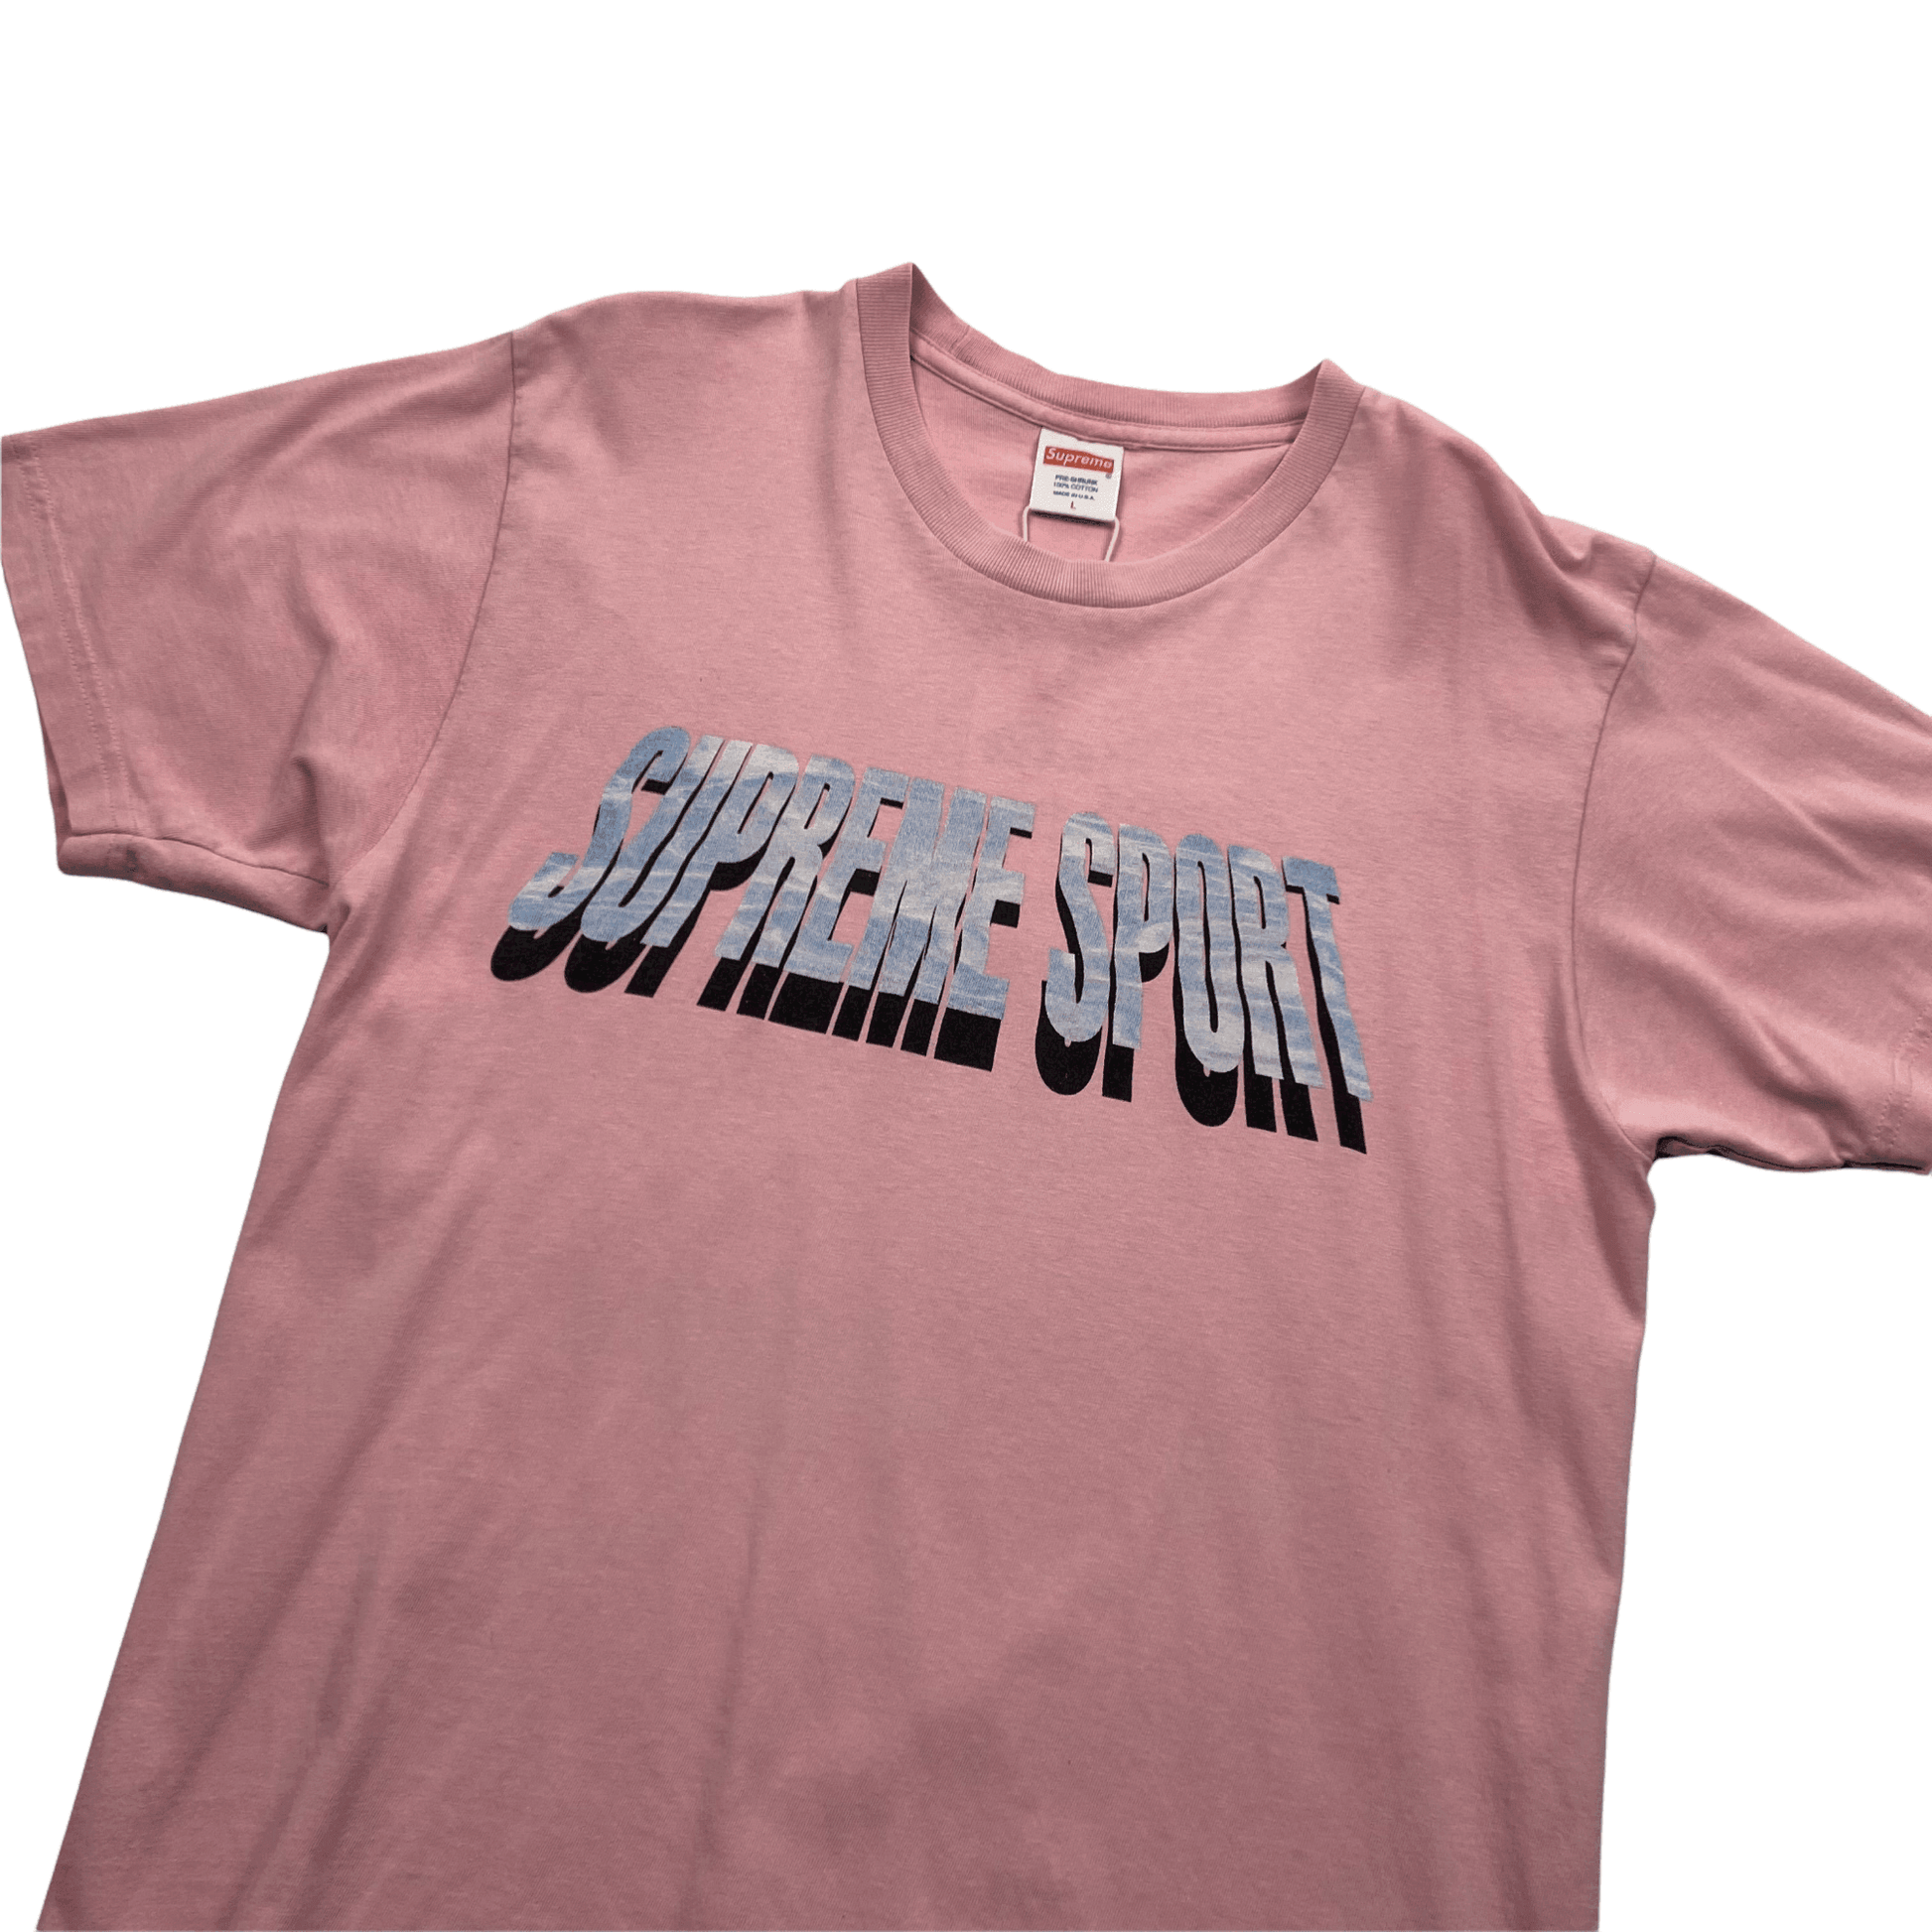 Pink Supreme Sport Tee - Large - The Streetwear Studio